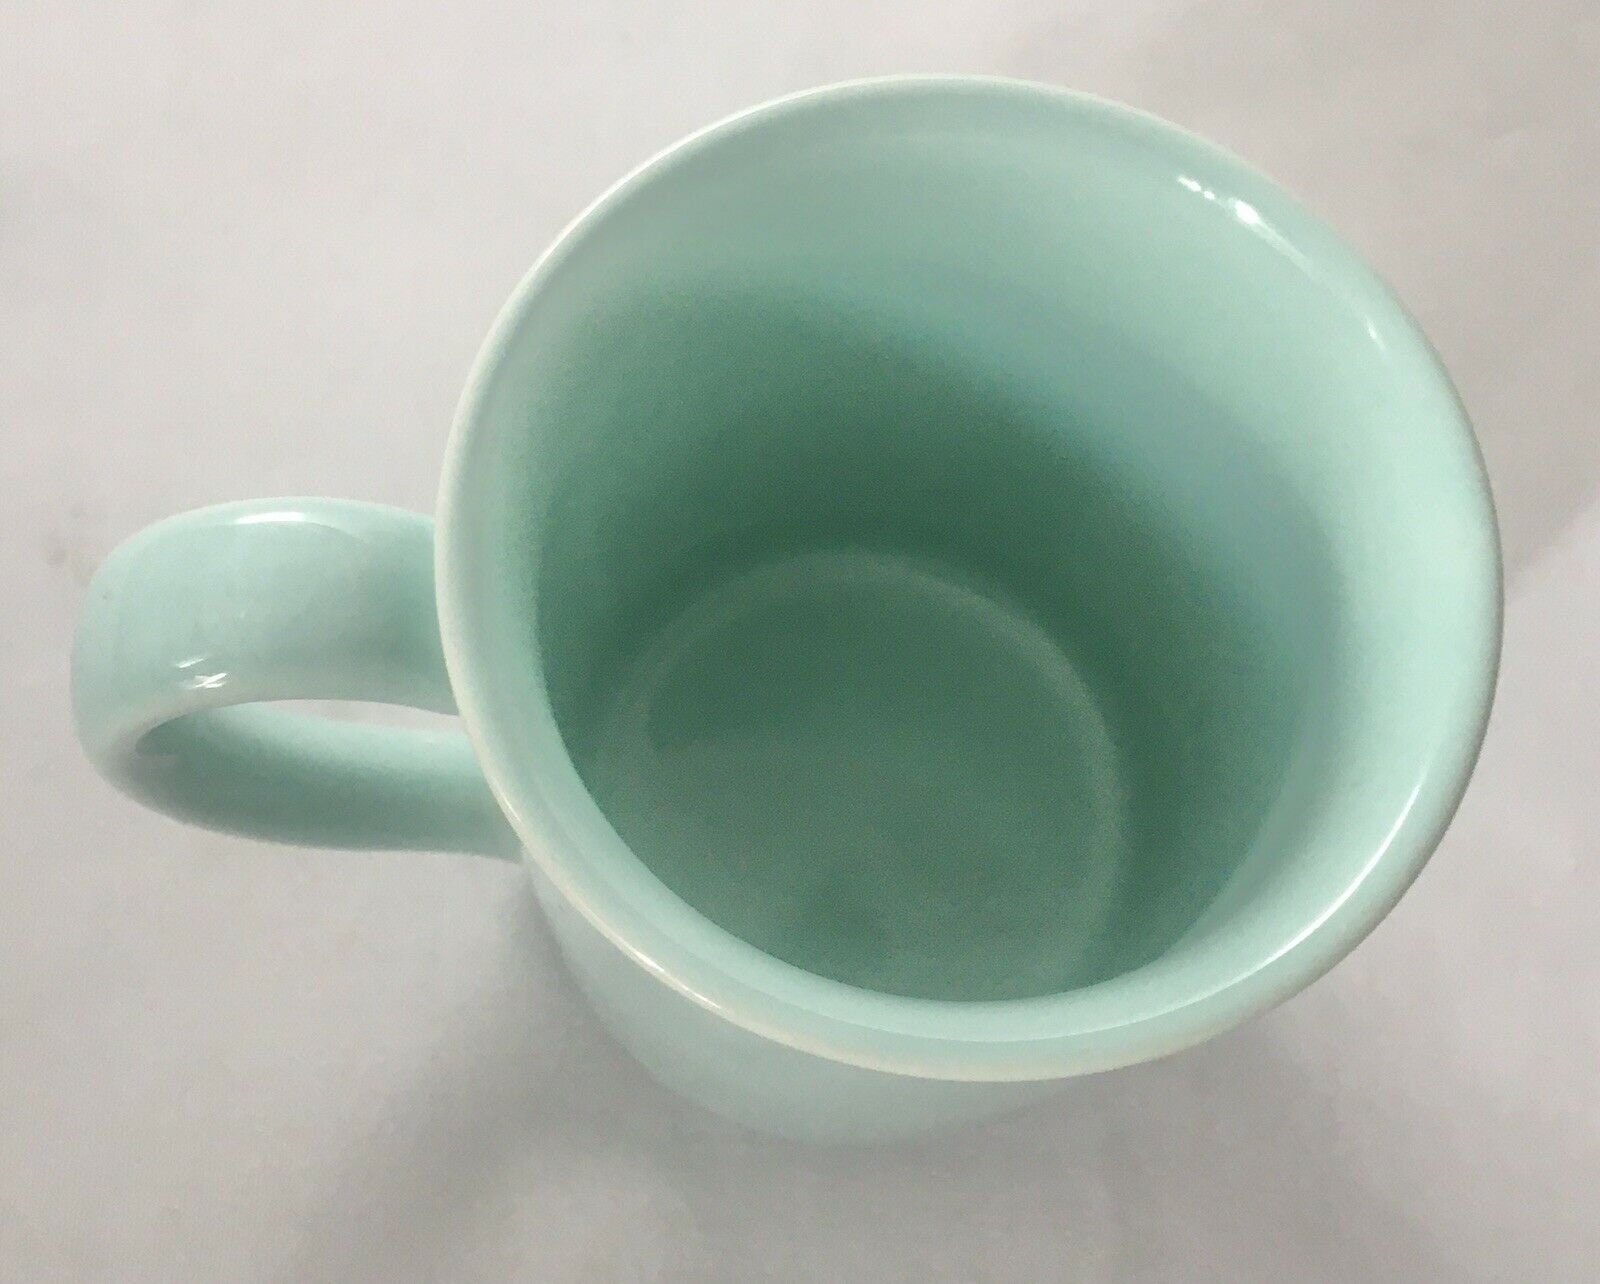 VTG Corning Ware Coffee Mug Microwavable Aqua/Seafoam Green Teal